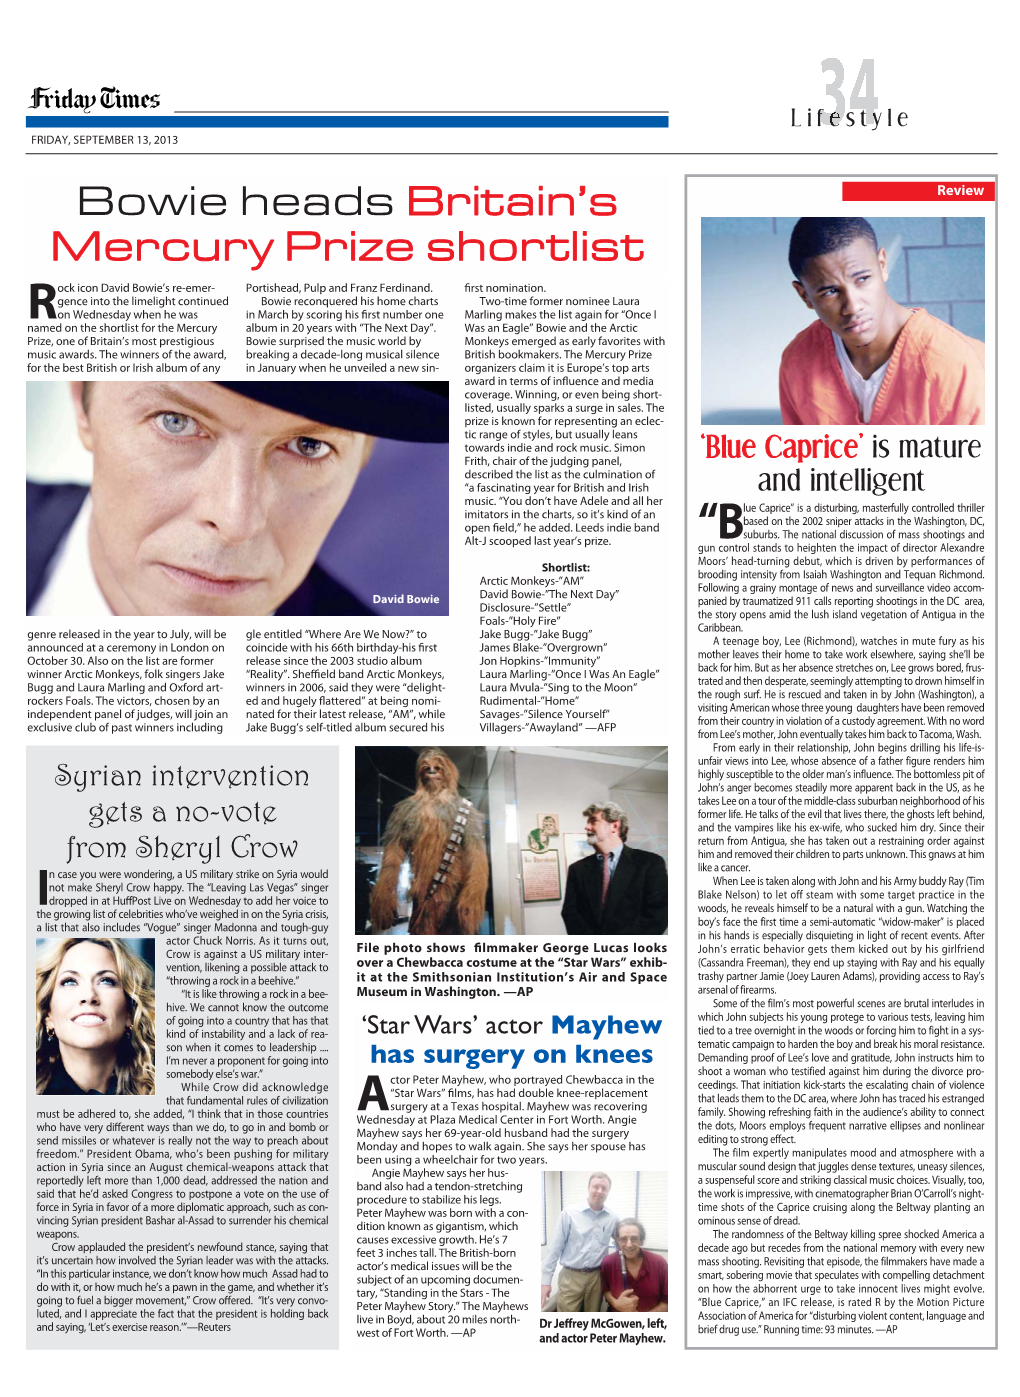 Bowie Heads Britain's Mercury Prize Shortlist